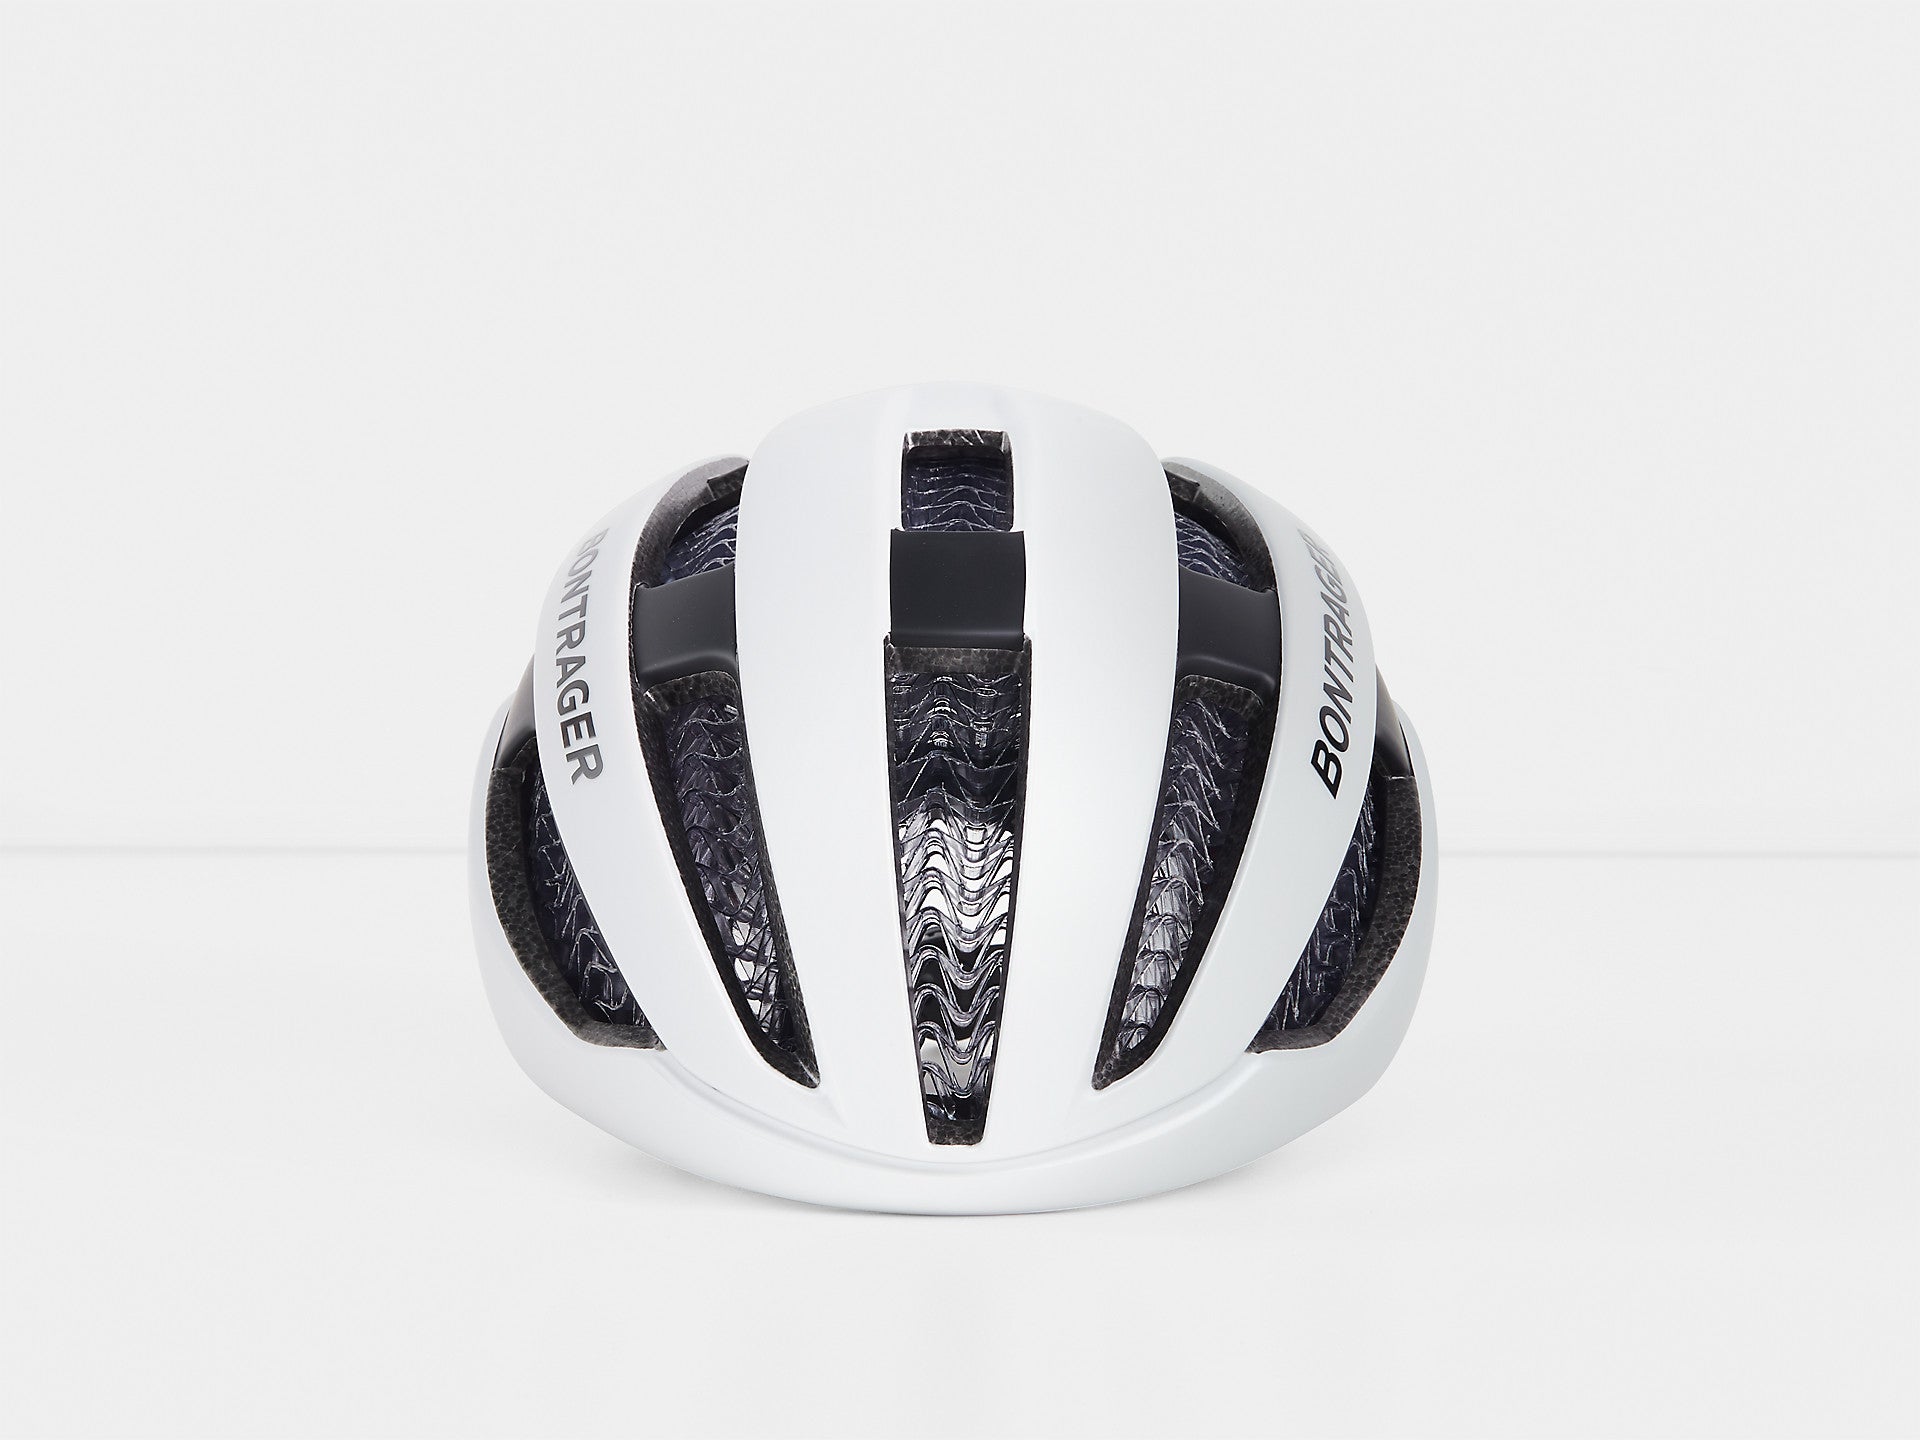 Bontrager Circuit WaveCel Road Bike Helmet（サーキット ウェーブ 